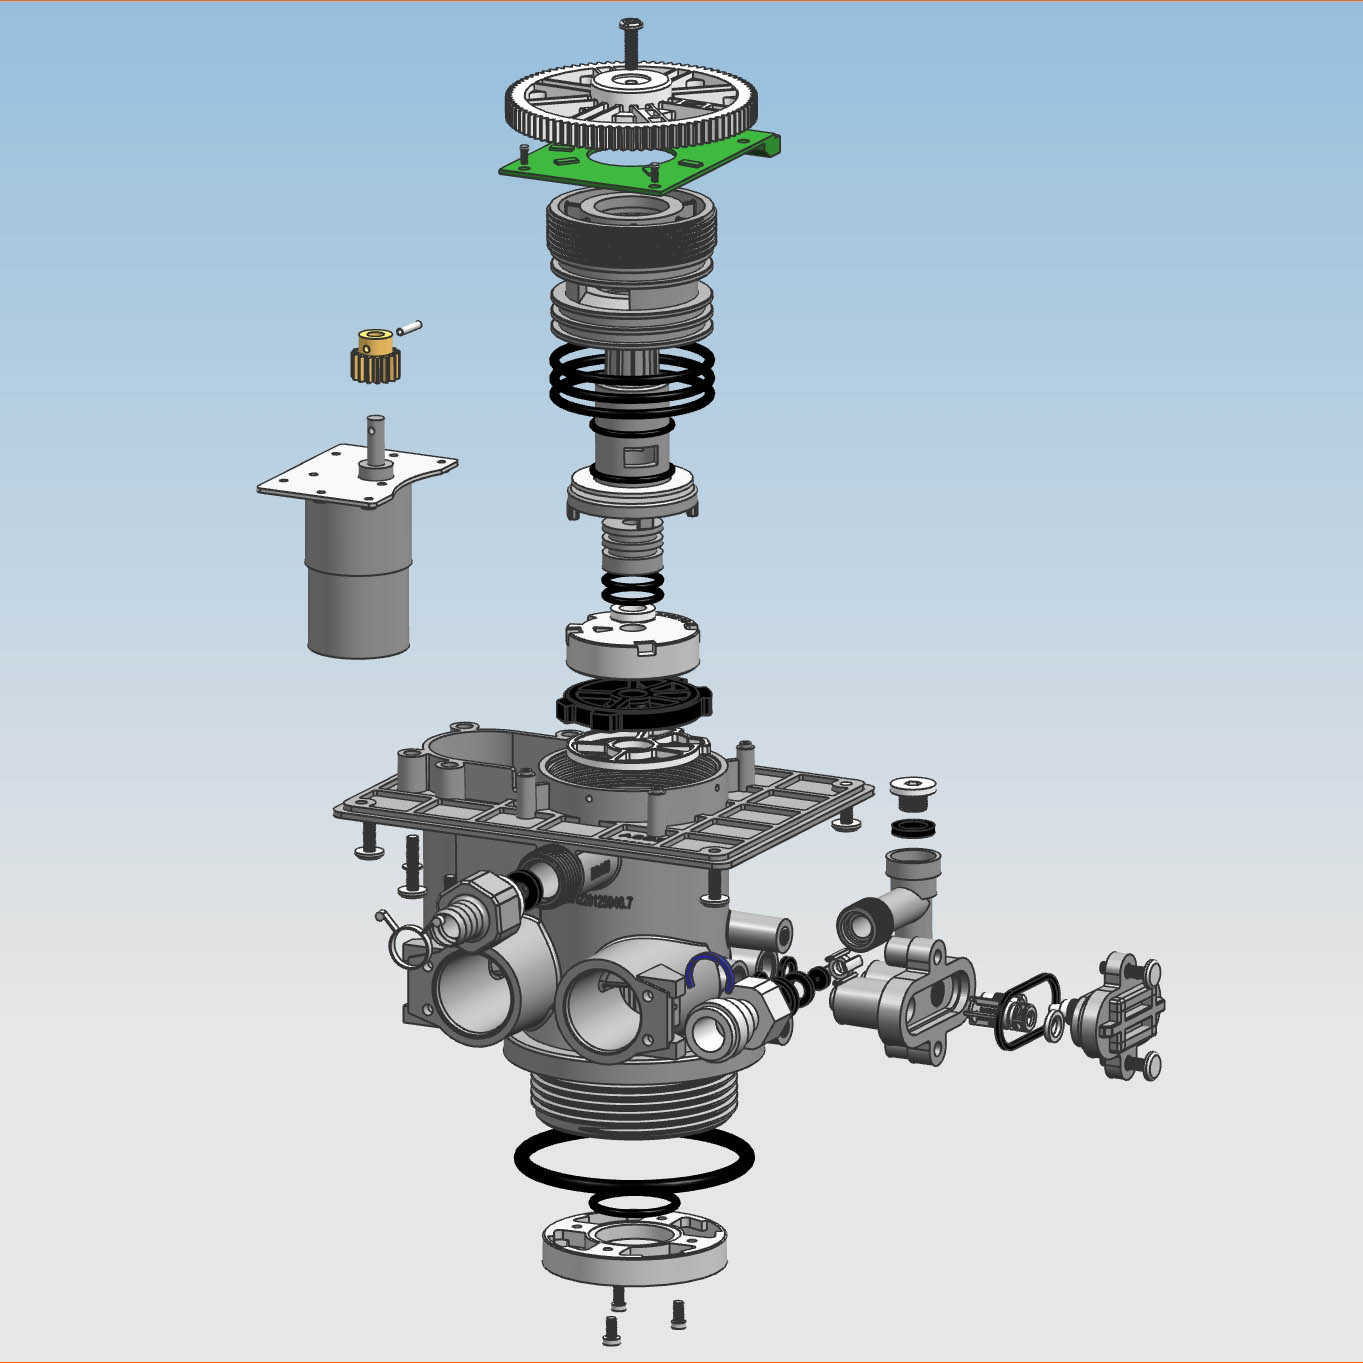 ASDU2-LCD 2 ton Automatic softener valve downflow upflow type